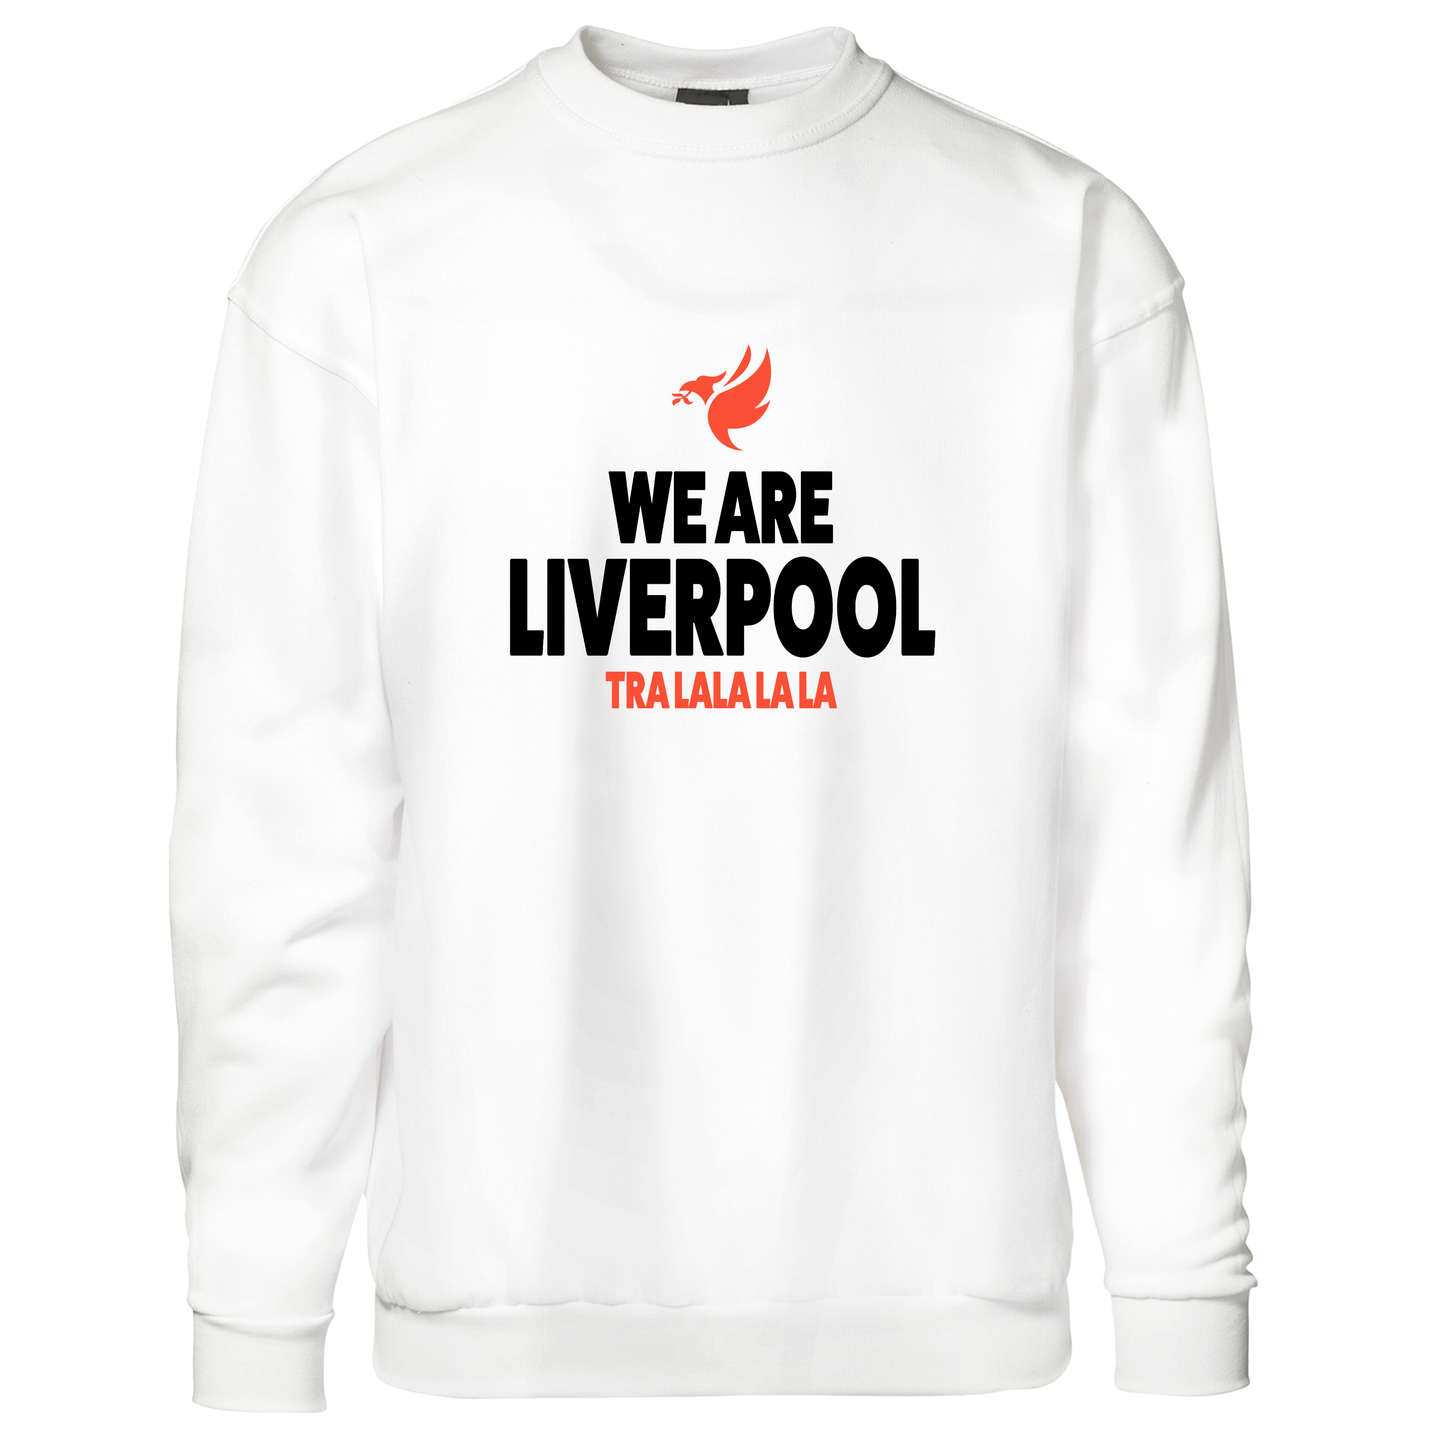 We are liverpool - Sweatshirt